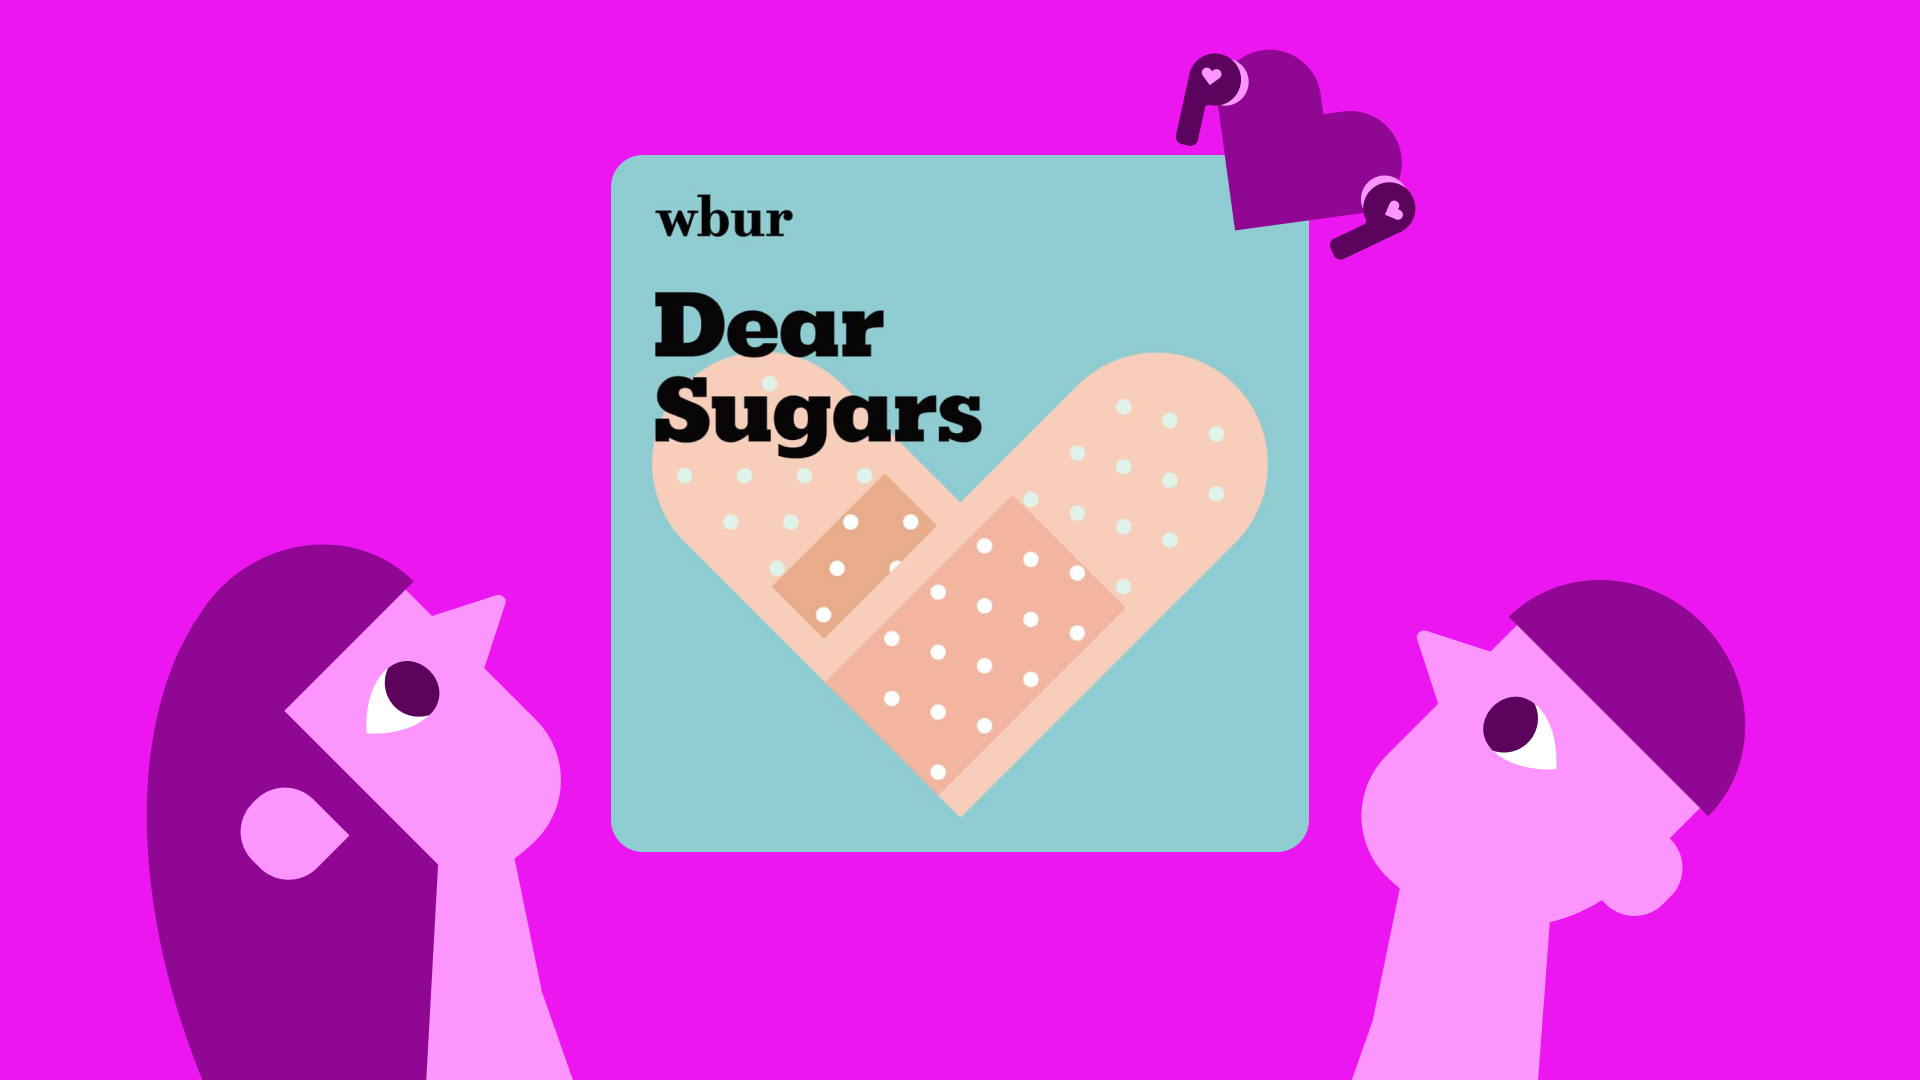 Dear sugars podcast